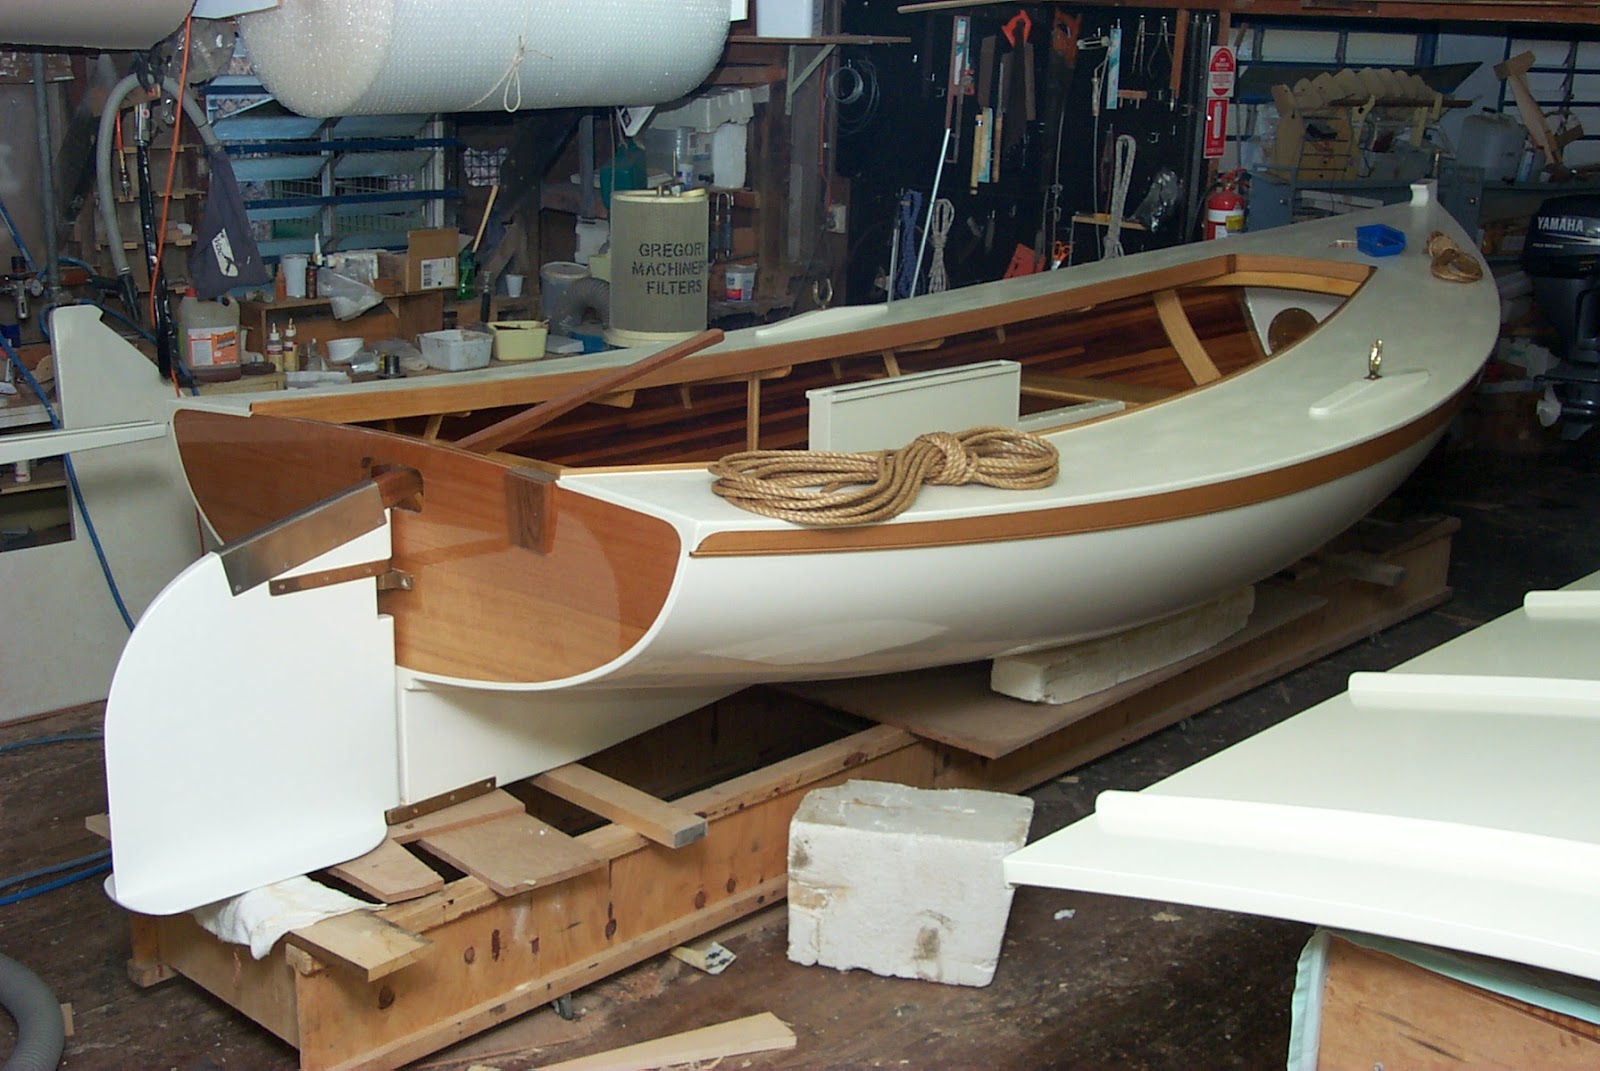 ross lillistone wooden boats: an interesting observation